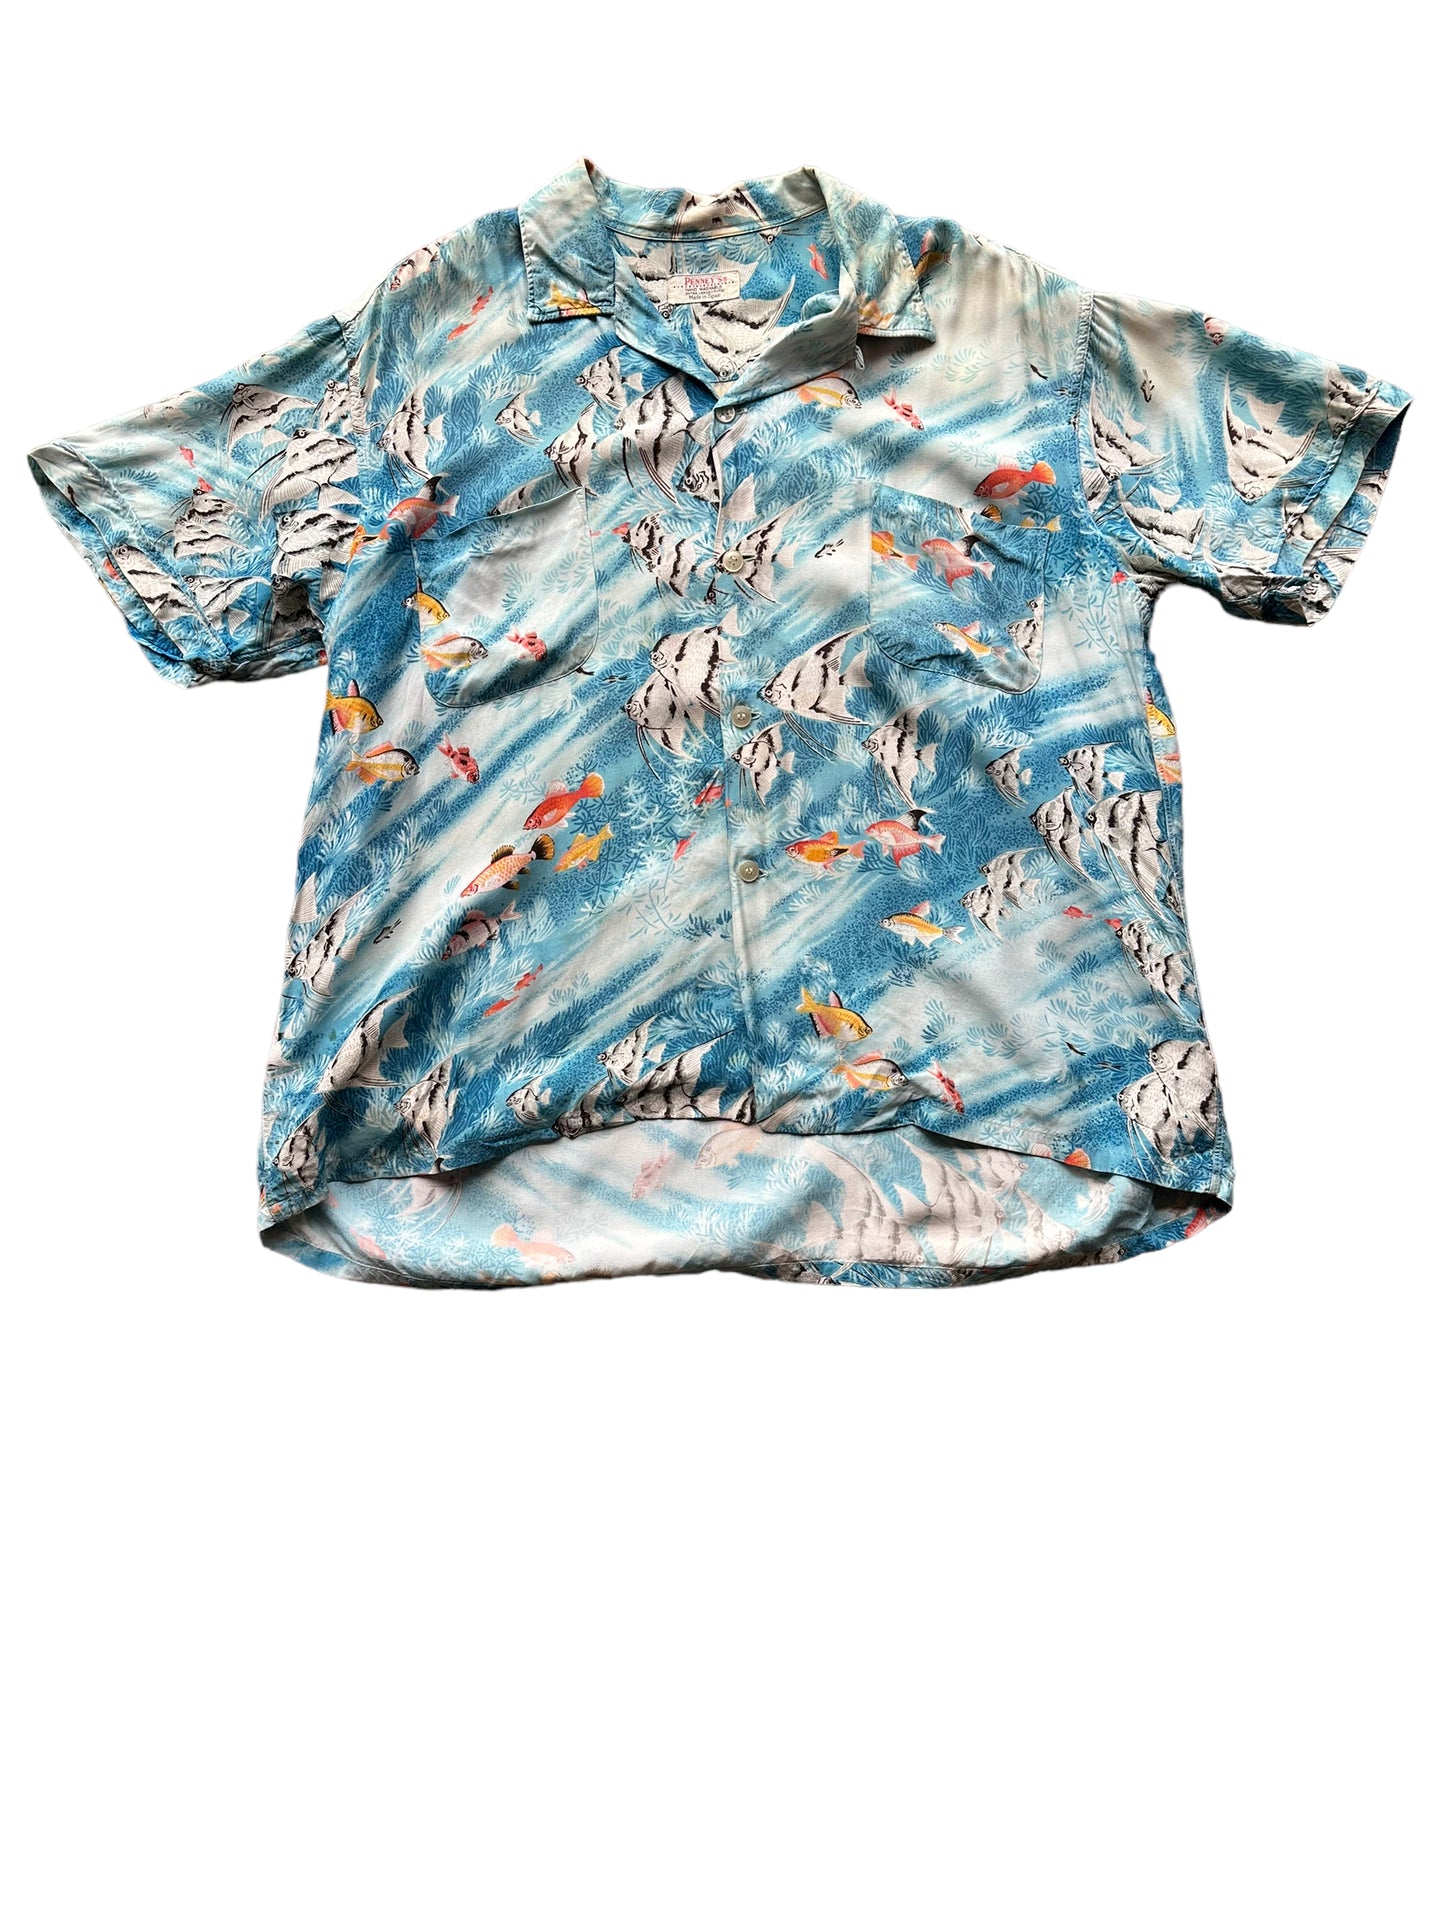 The Barn Owl Vintage Blue Patterned Hawaiian Holiday Rayon Shirt Sz S | Seattle Vintage Hawaiian Shirt | Barn Owl Vintage Clothing Seattle